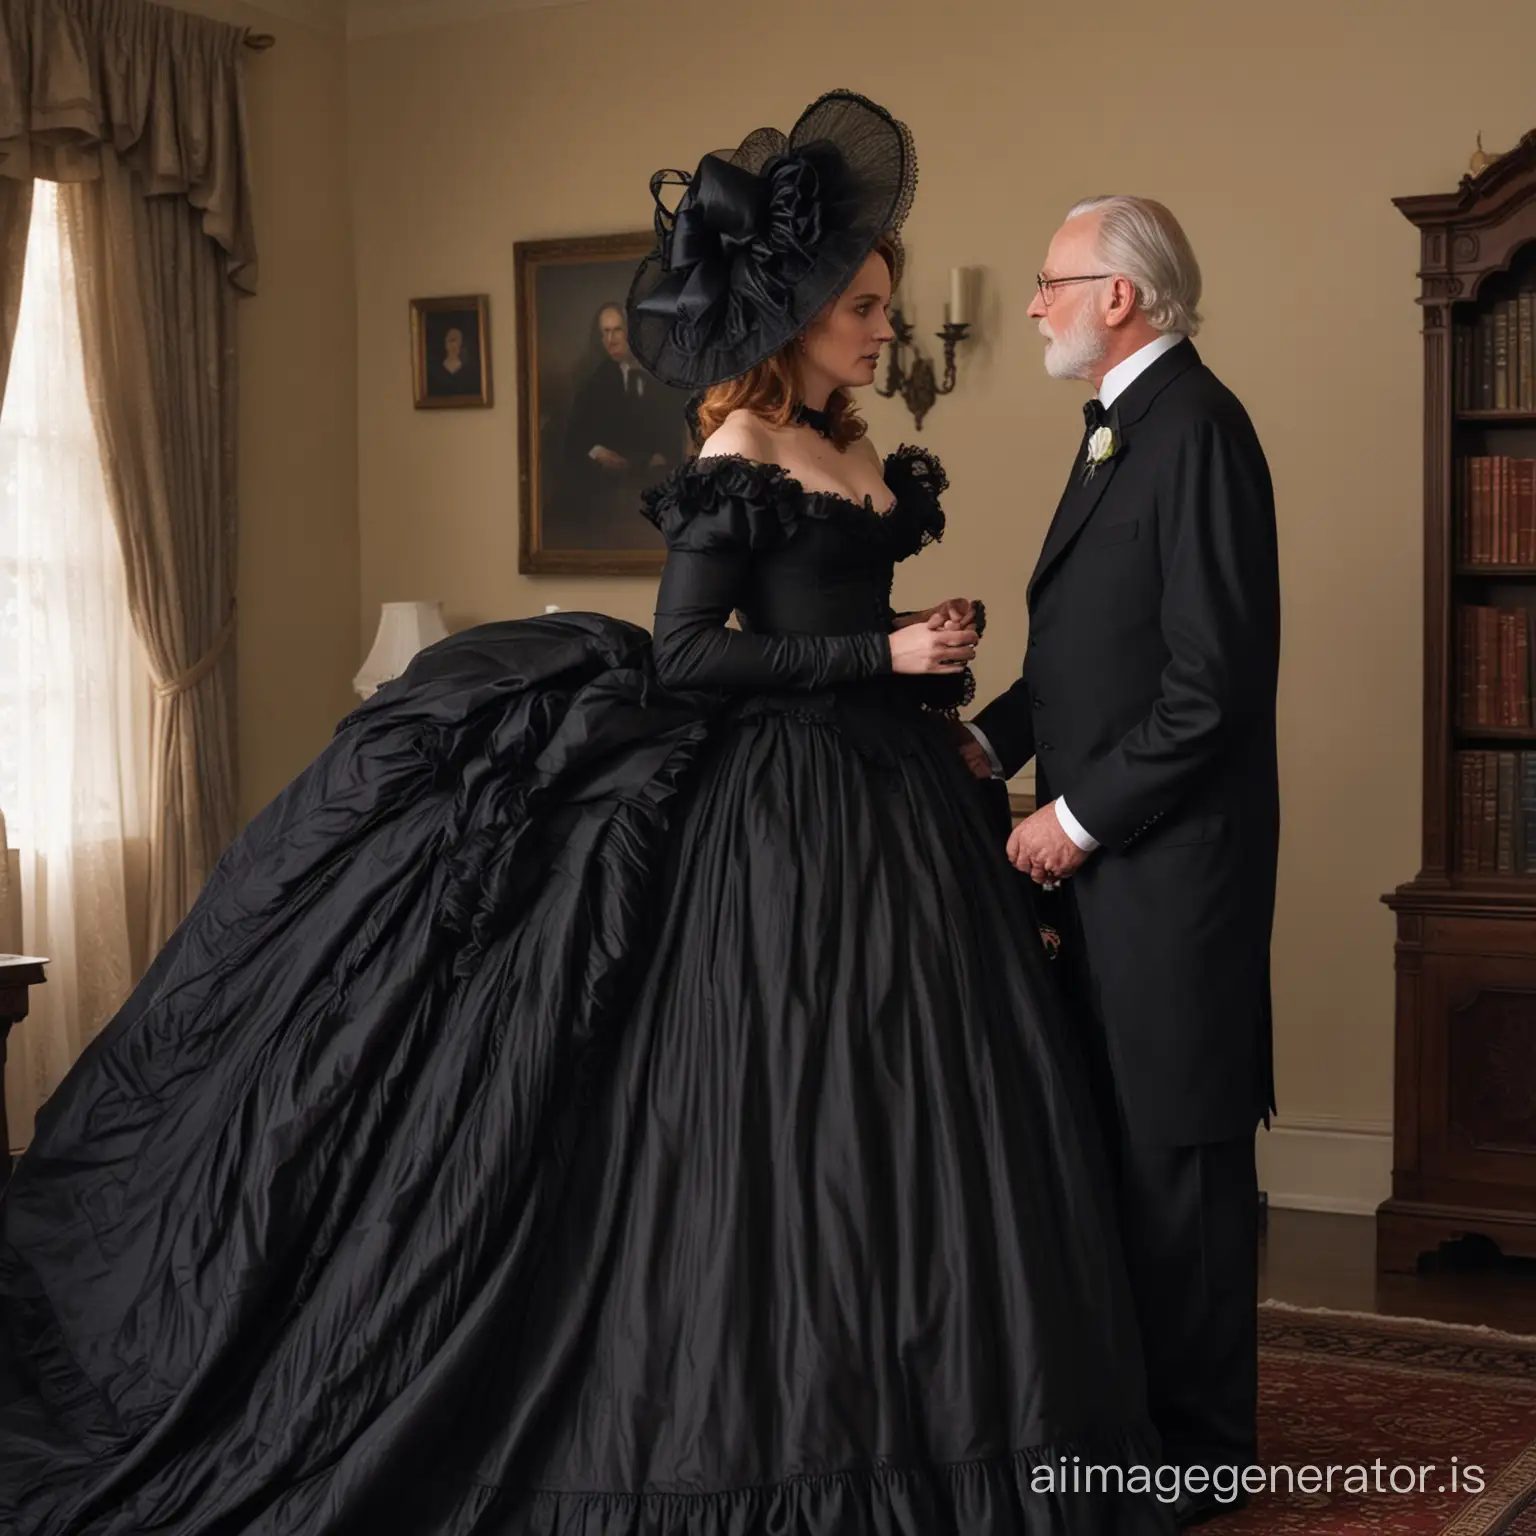 Victorian-Bride-Dana-Scully-Kisses-Newlywed-Husband-in-Black-Crinoline-Dress